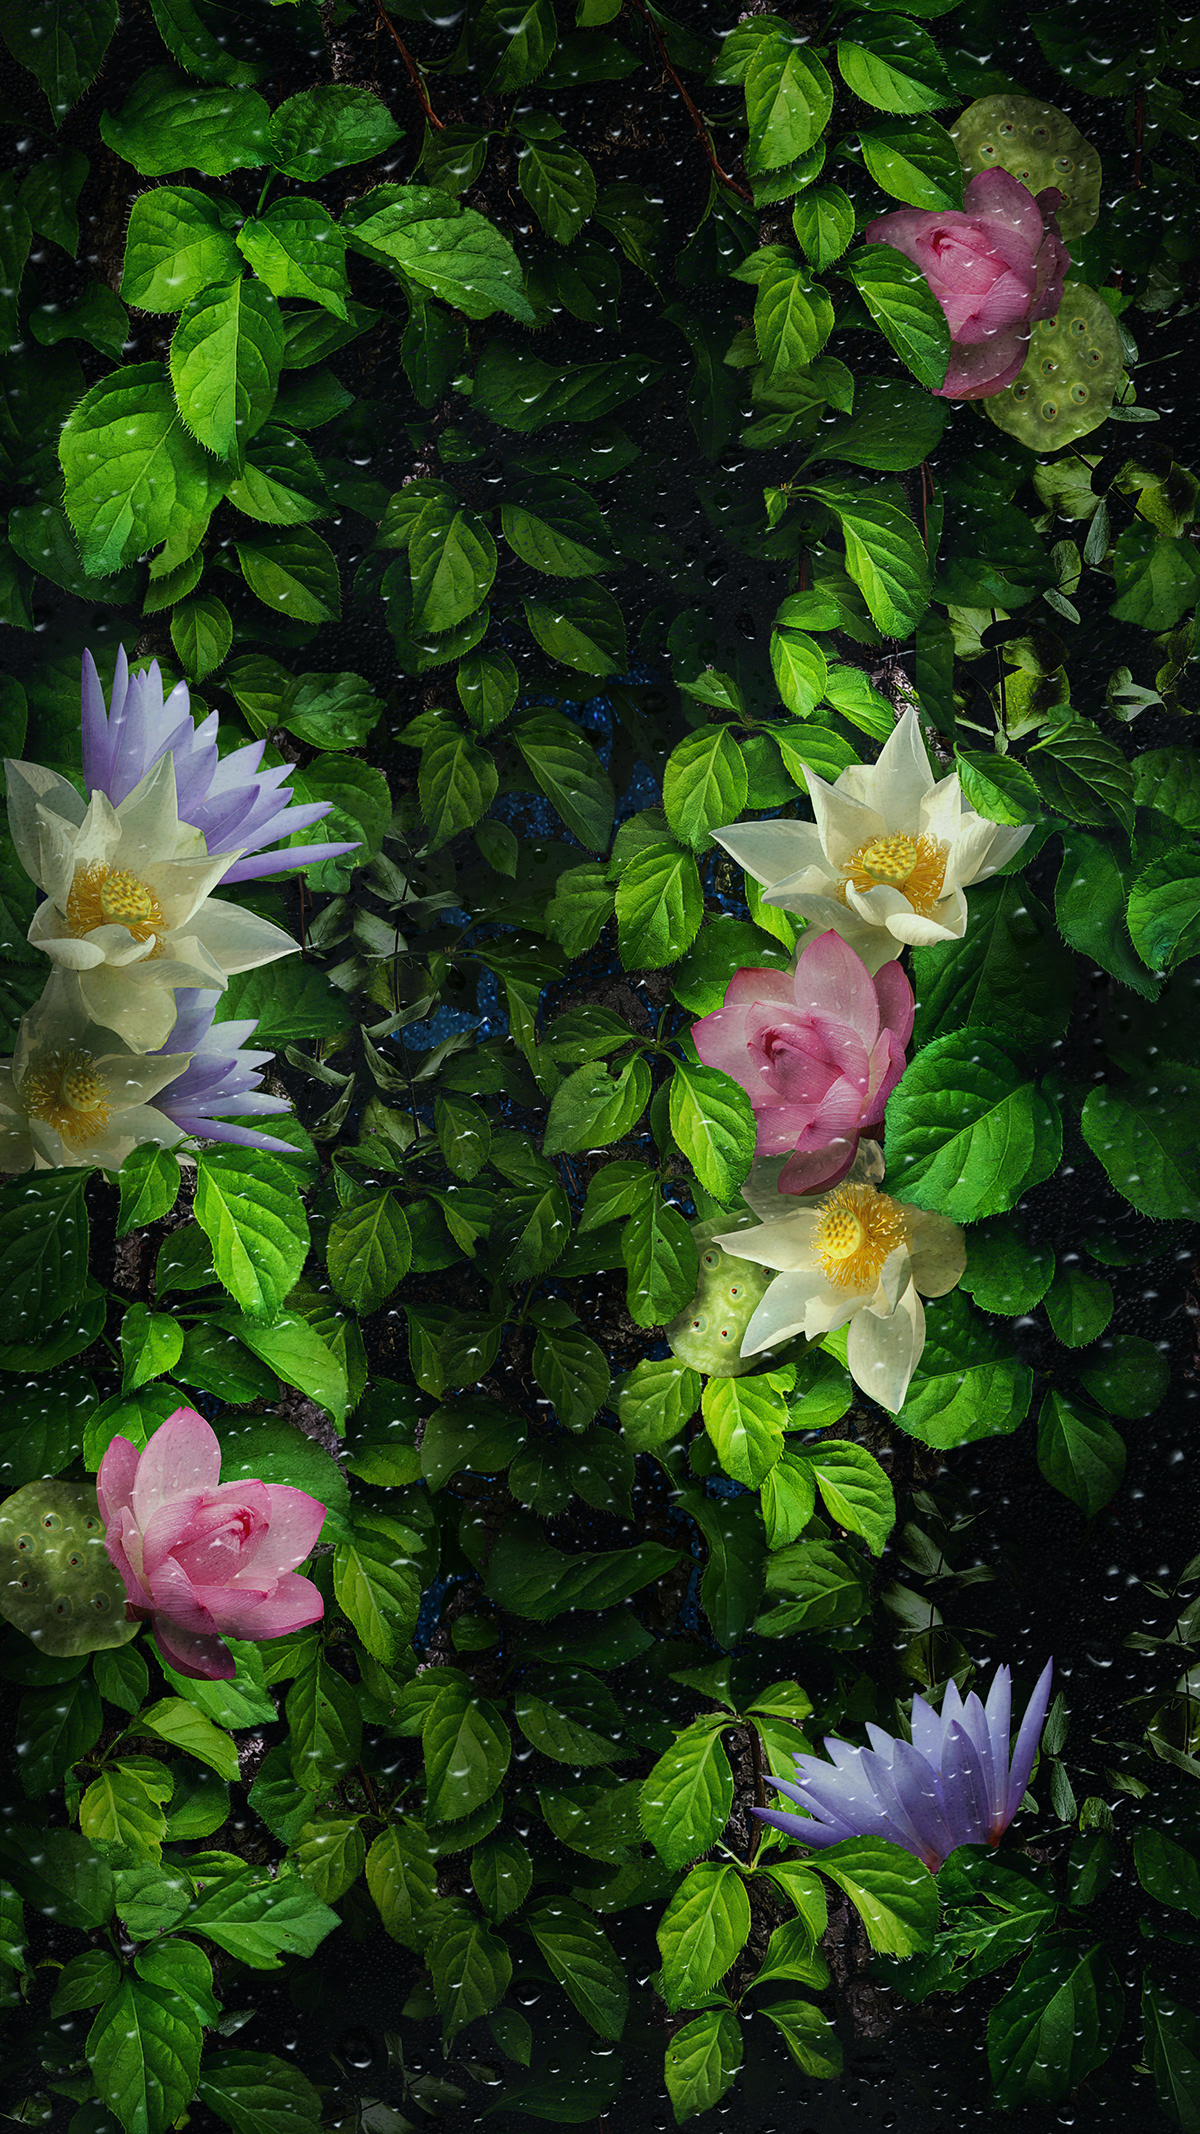 flower Nature floral Lotus Mattepainting leaves plants green dark glow